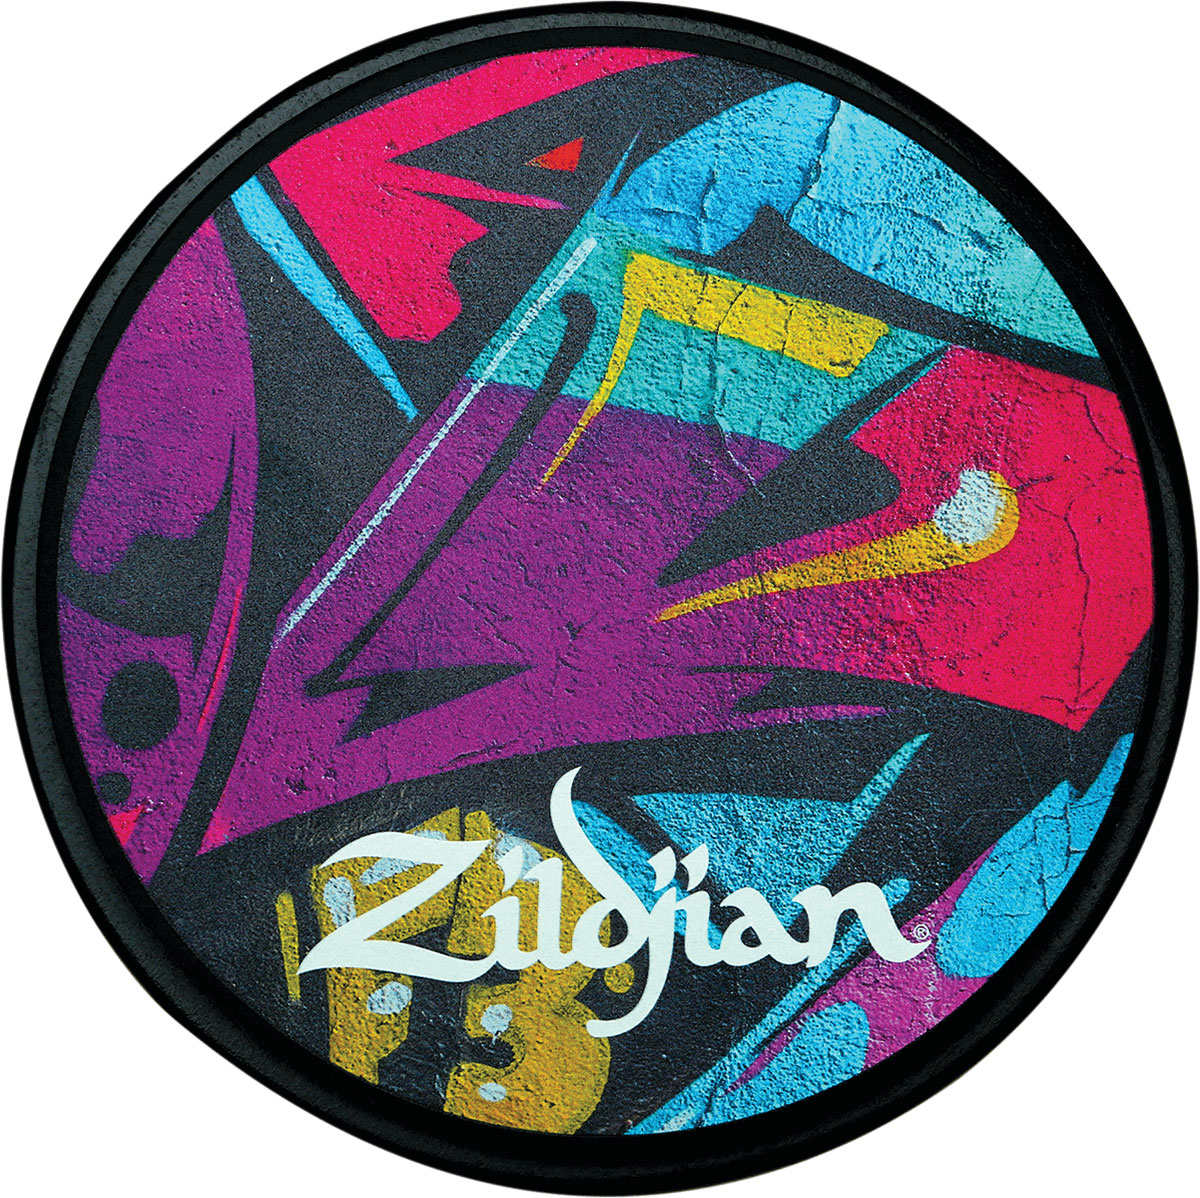 ZILDJIAN ACCESSORIES ZXPPGRA06 - PAD DI ALLENAMENTO 06 GRAFFITI 